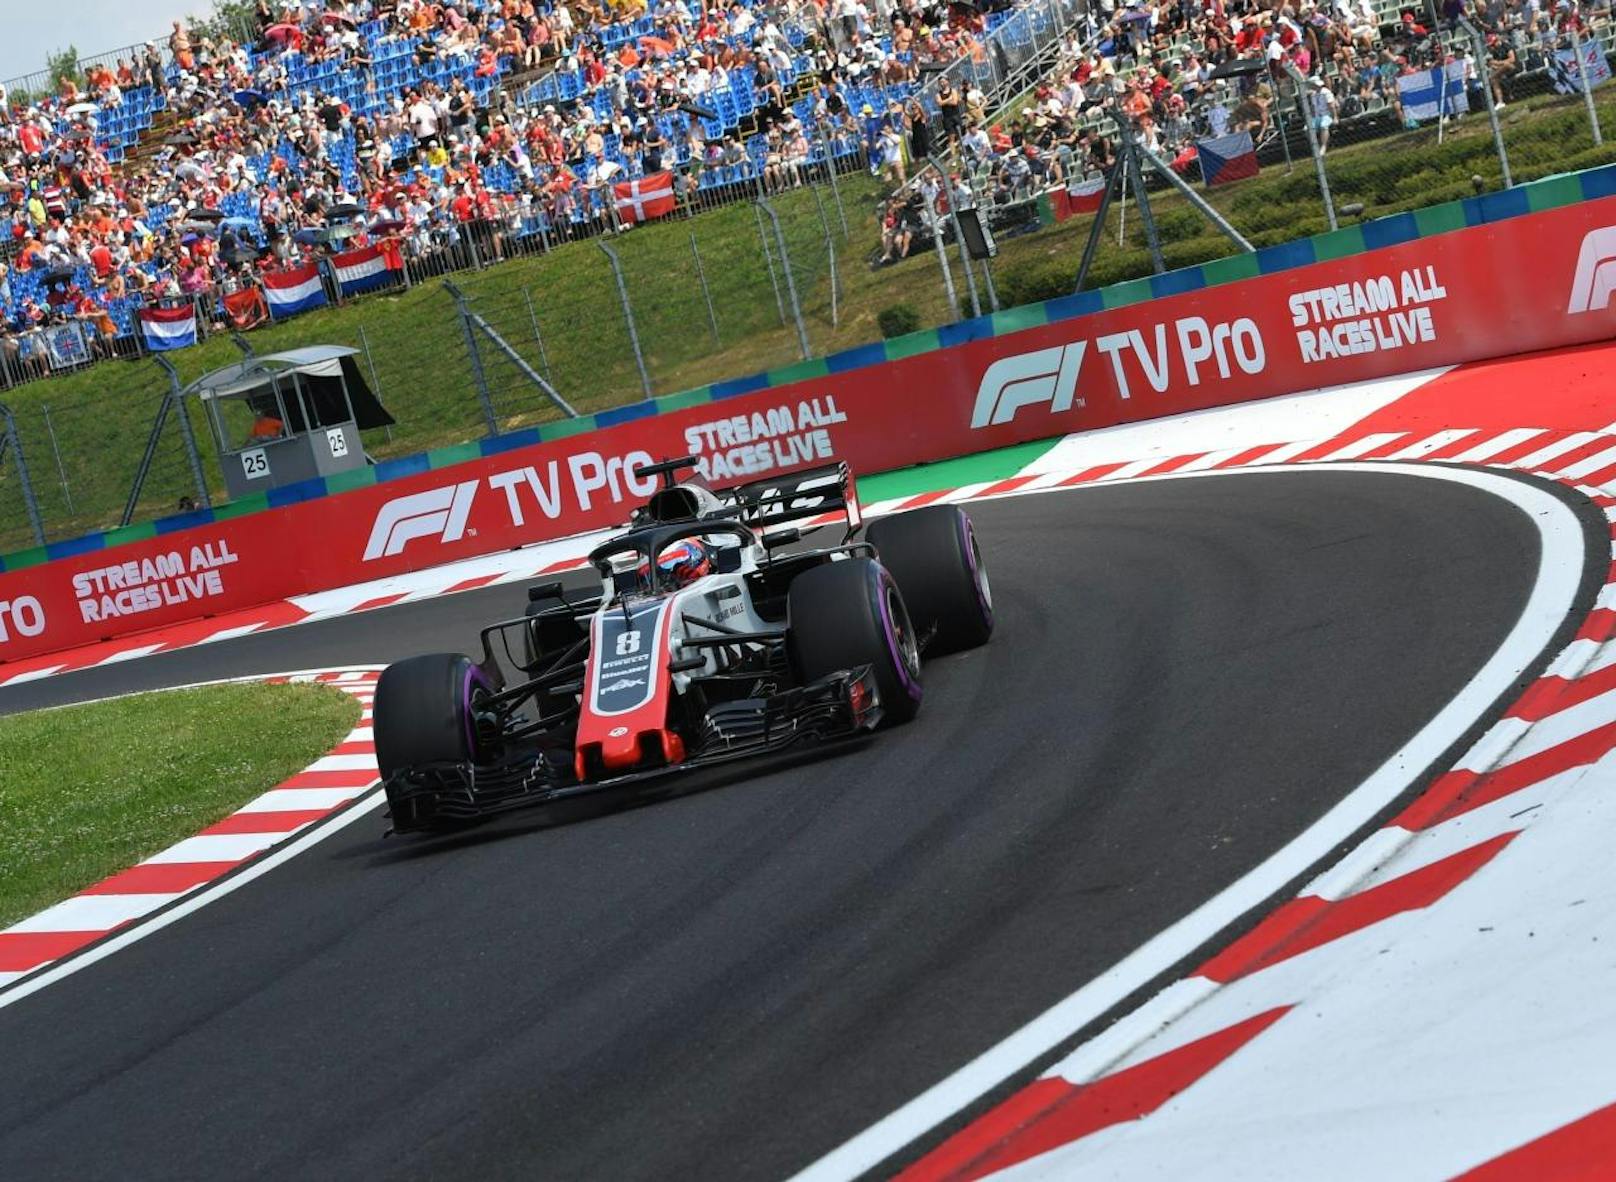 <b>Platz 9
</b>Haas F1: 45 Millionen Euro